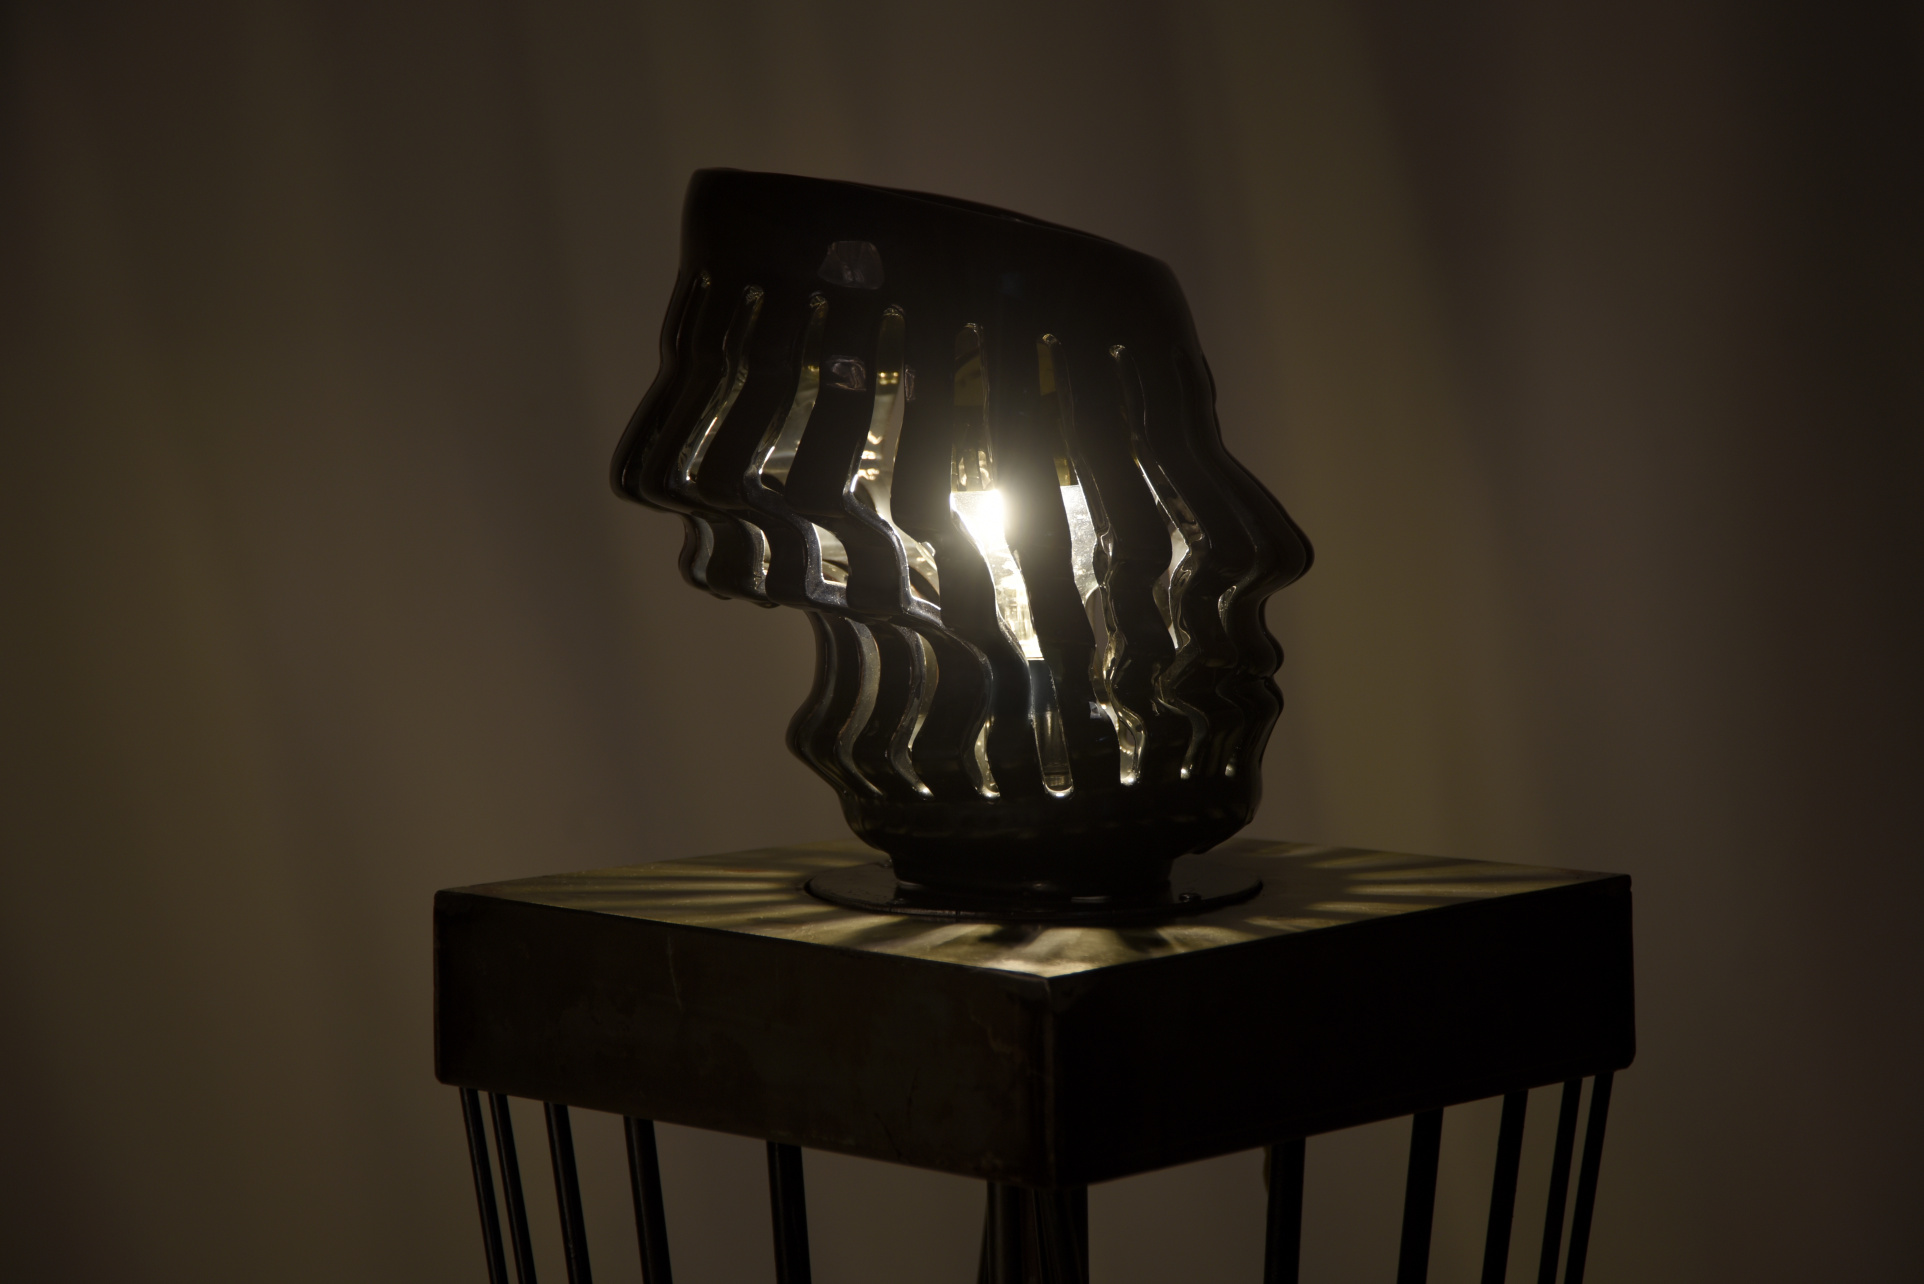 kurvo - fLuxus - 6 - Slip Casting - Metallic Black Glaze Ceramic Lamp - 2016 - £1150 - High Res